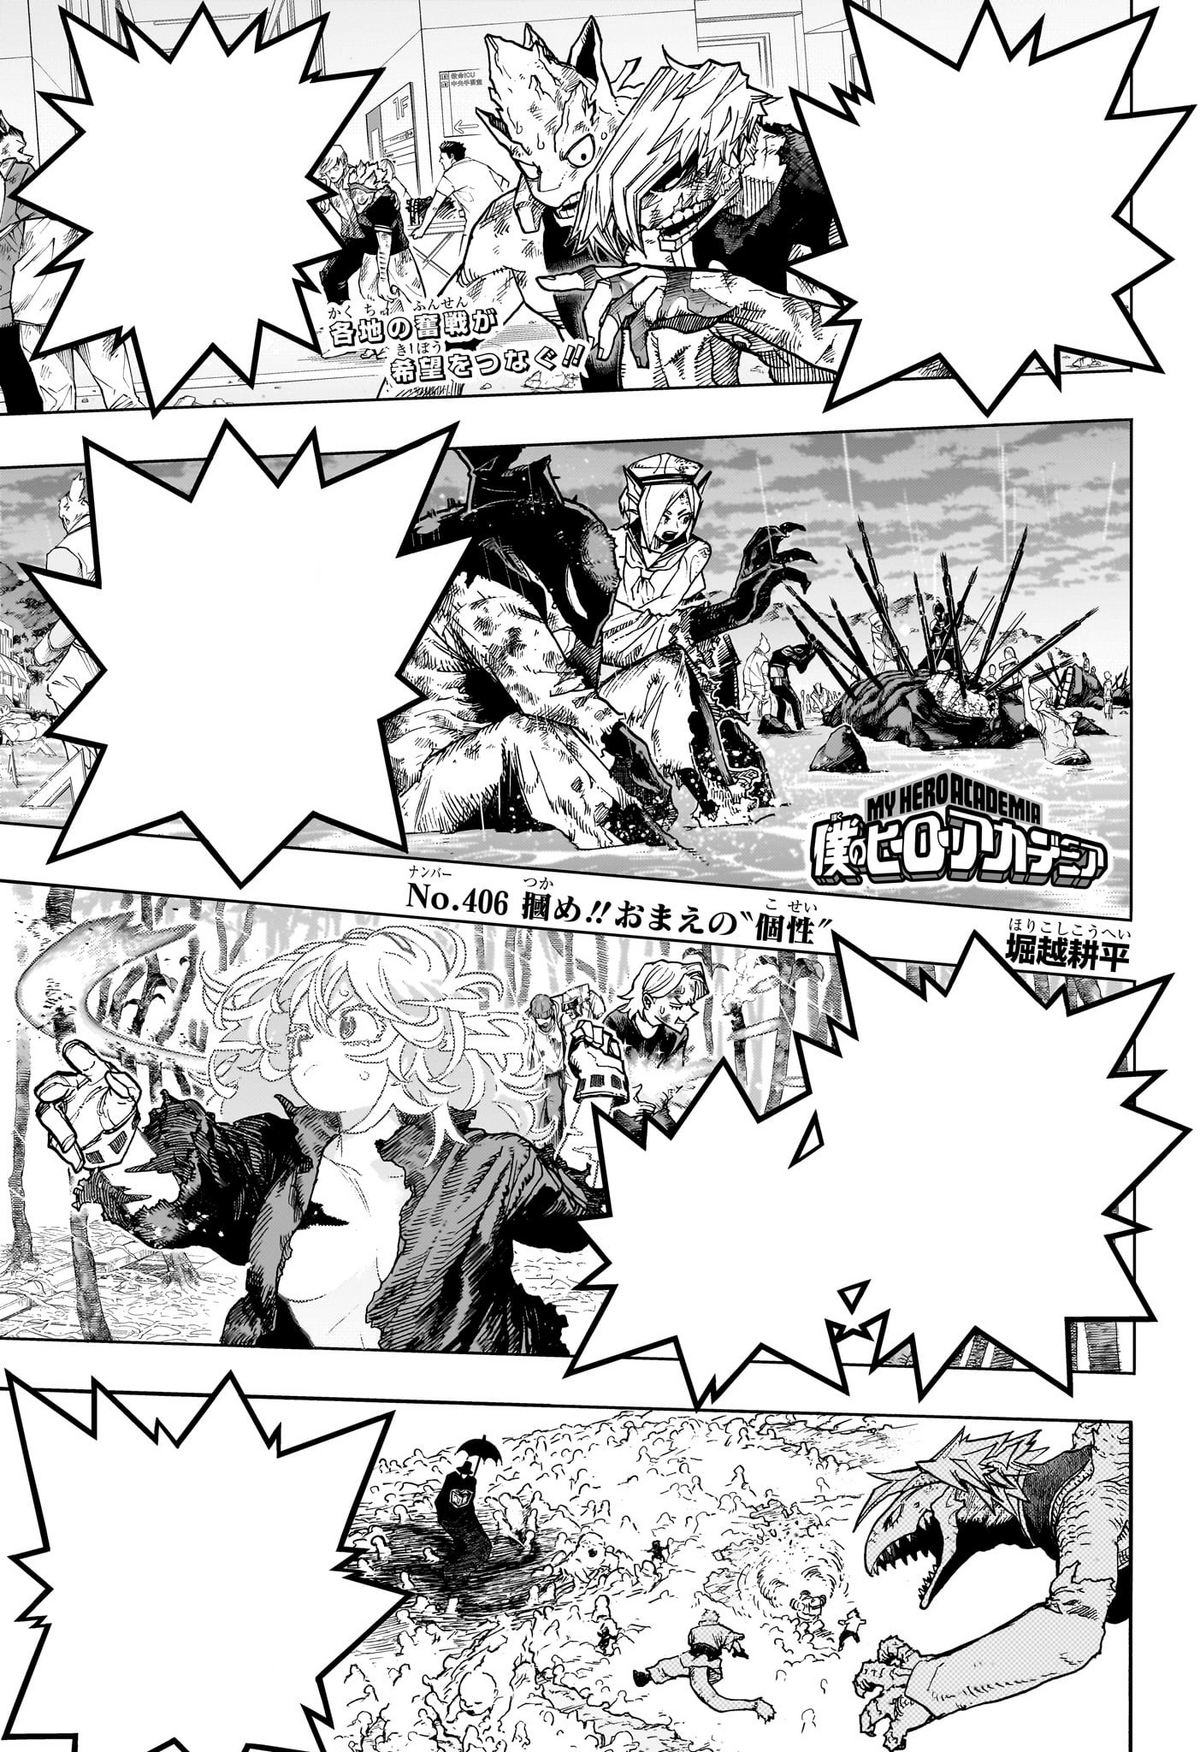 Read Boku No Hero Academia 407 - Oni Scan